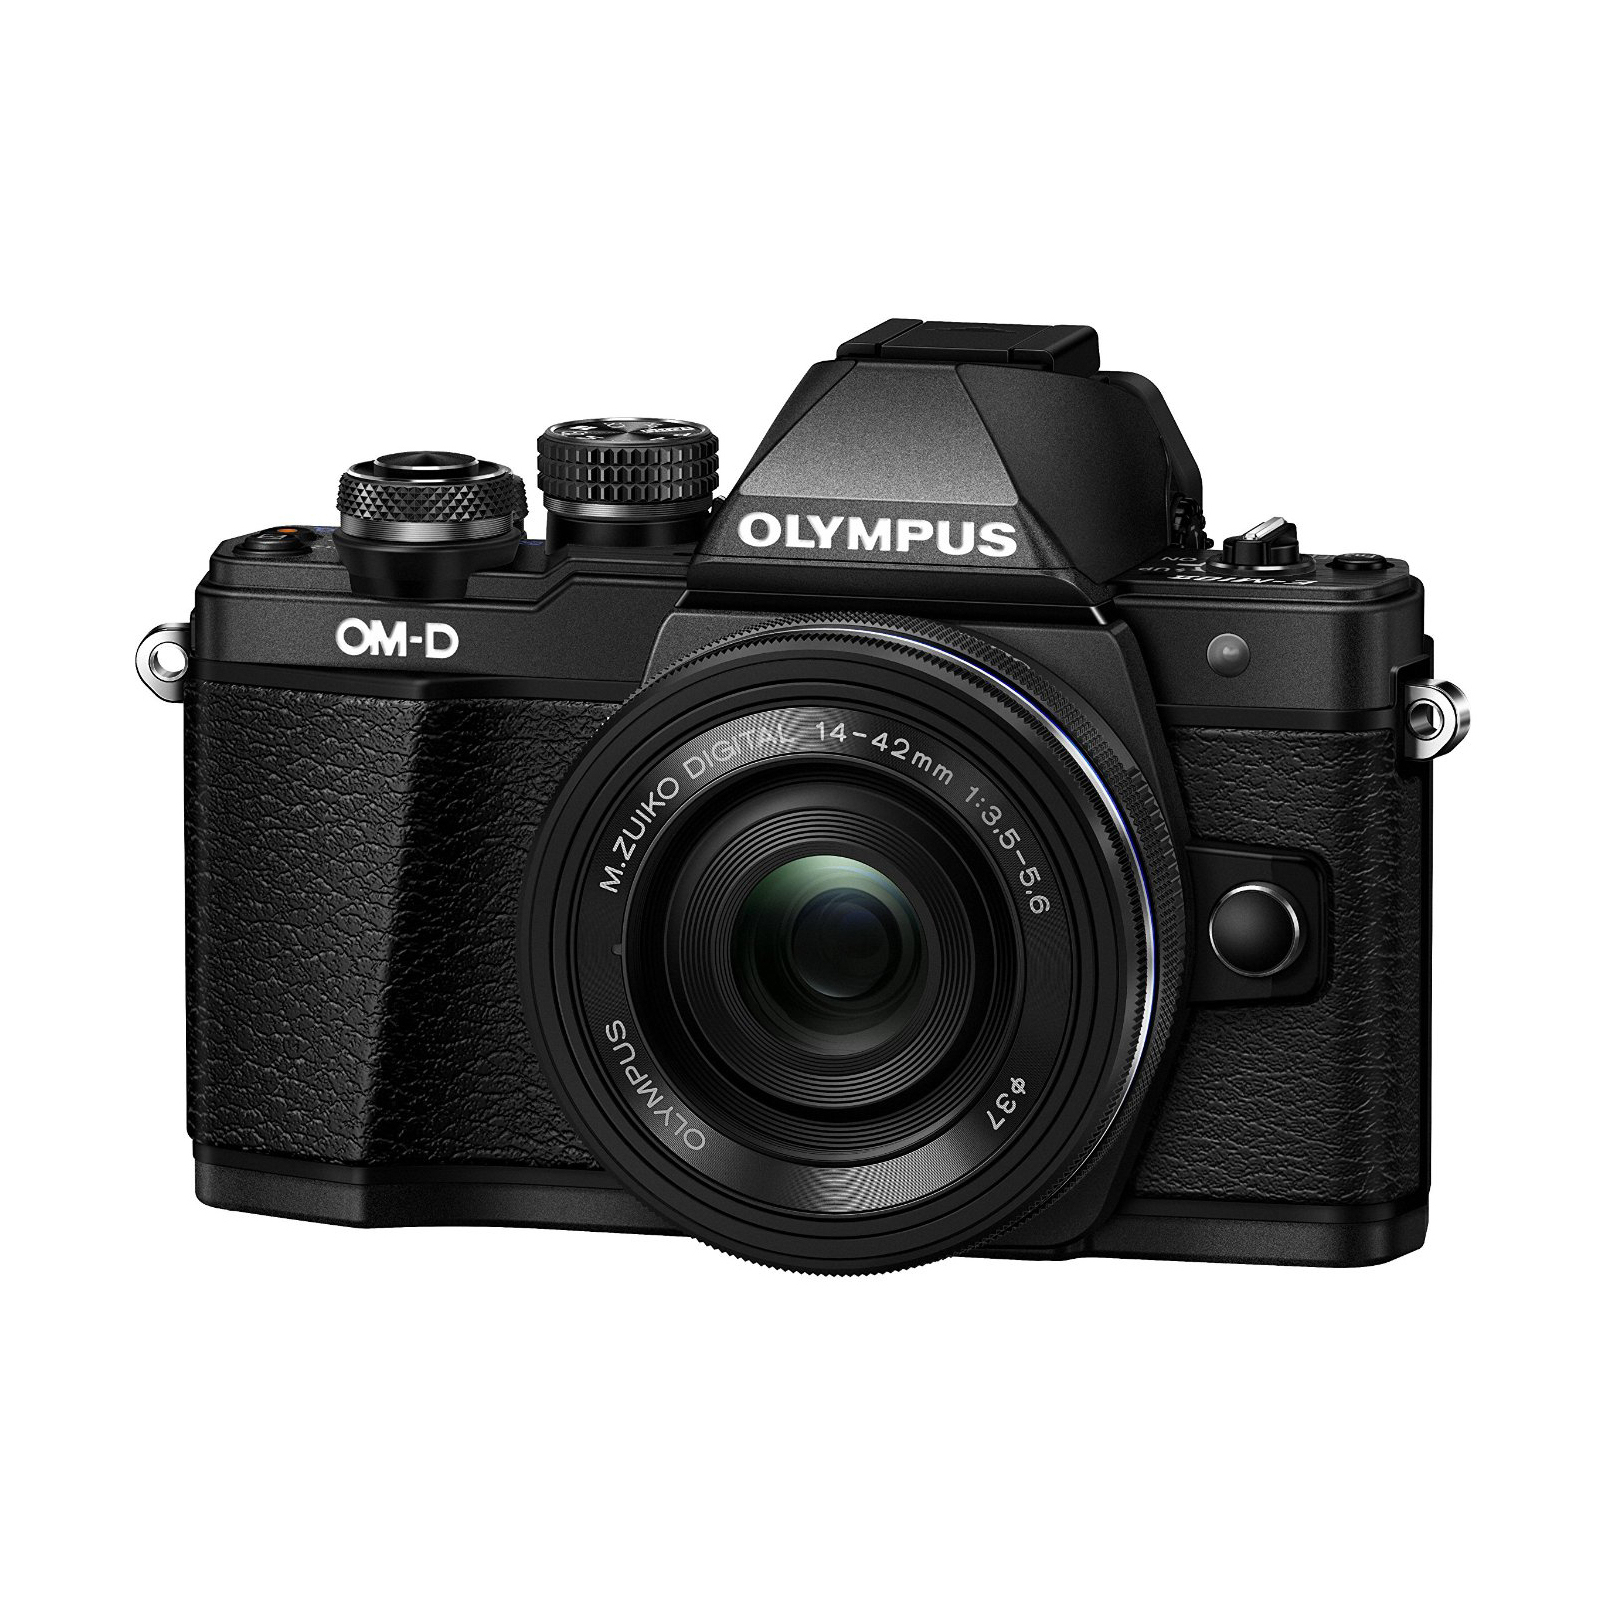 Цифровий фотоапарат Olympus E-M10 mark II Pancake Zoom 14-42 Kit black/black (V207052BE000)